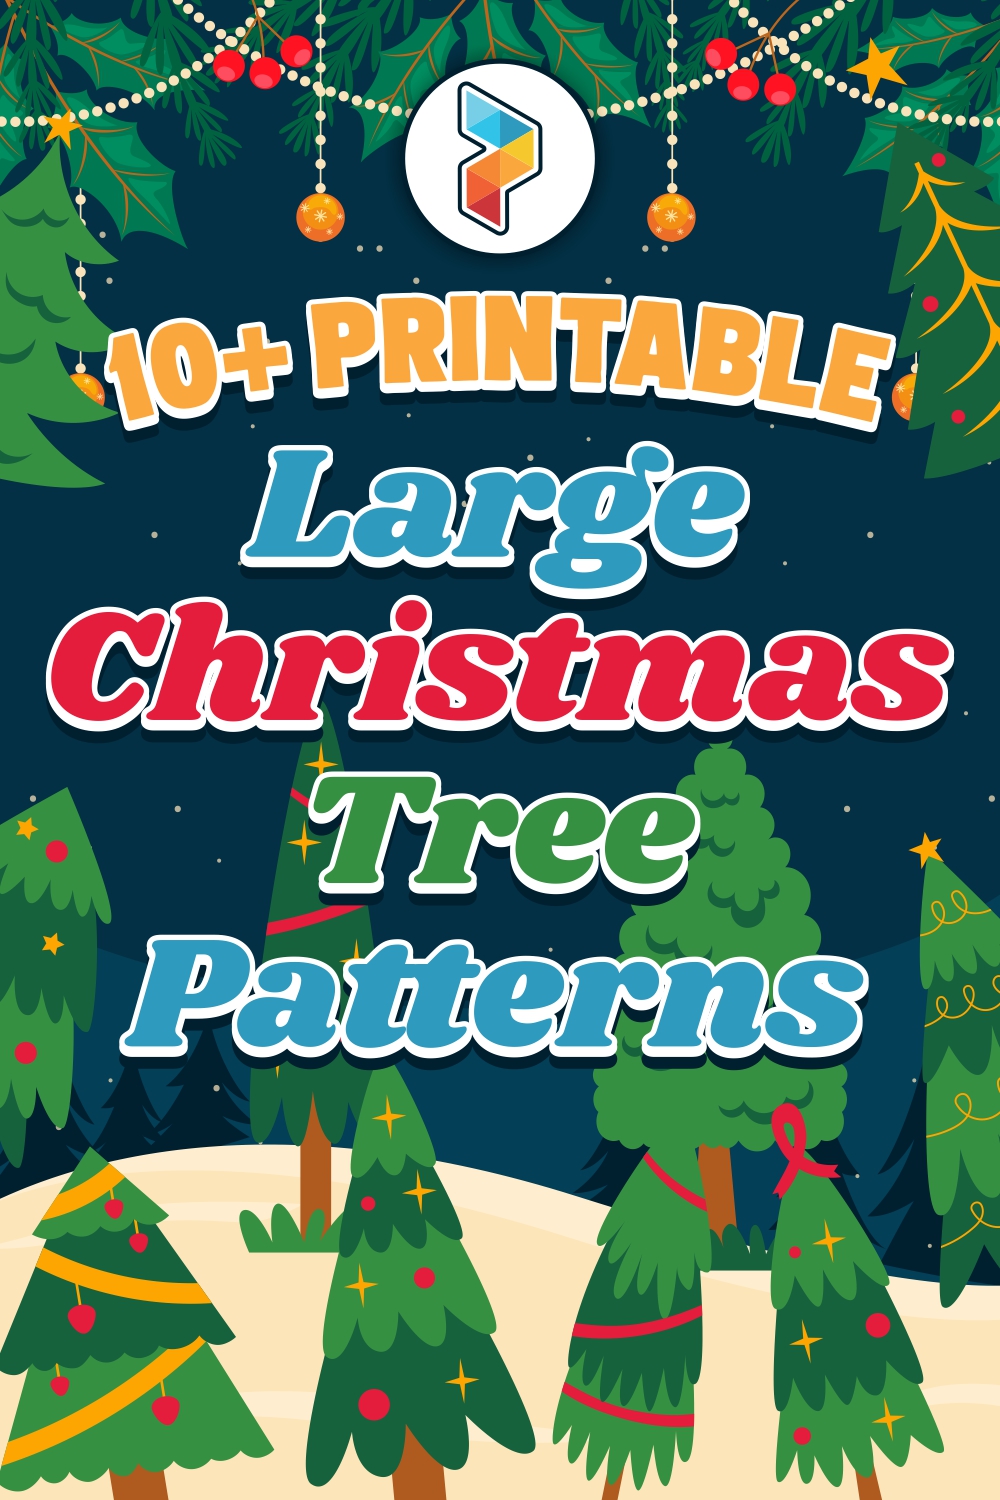 Large Printable Christmas Tree Patterns